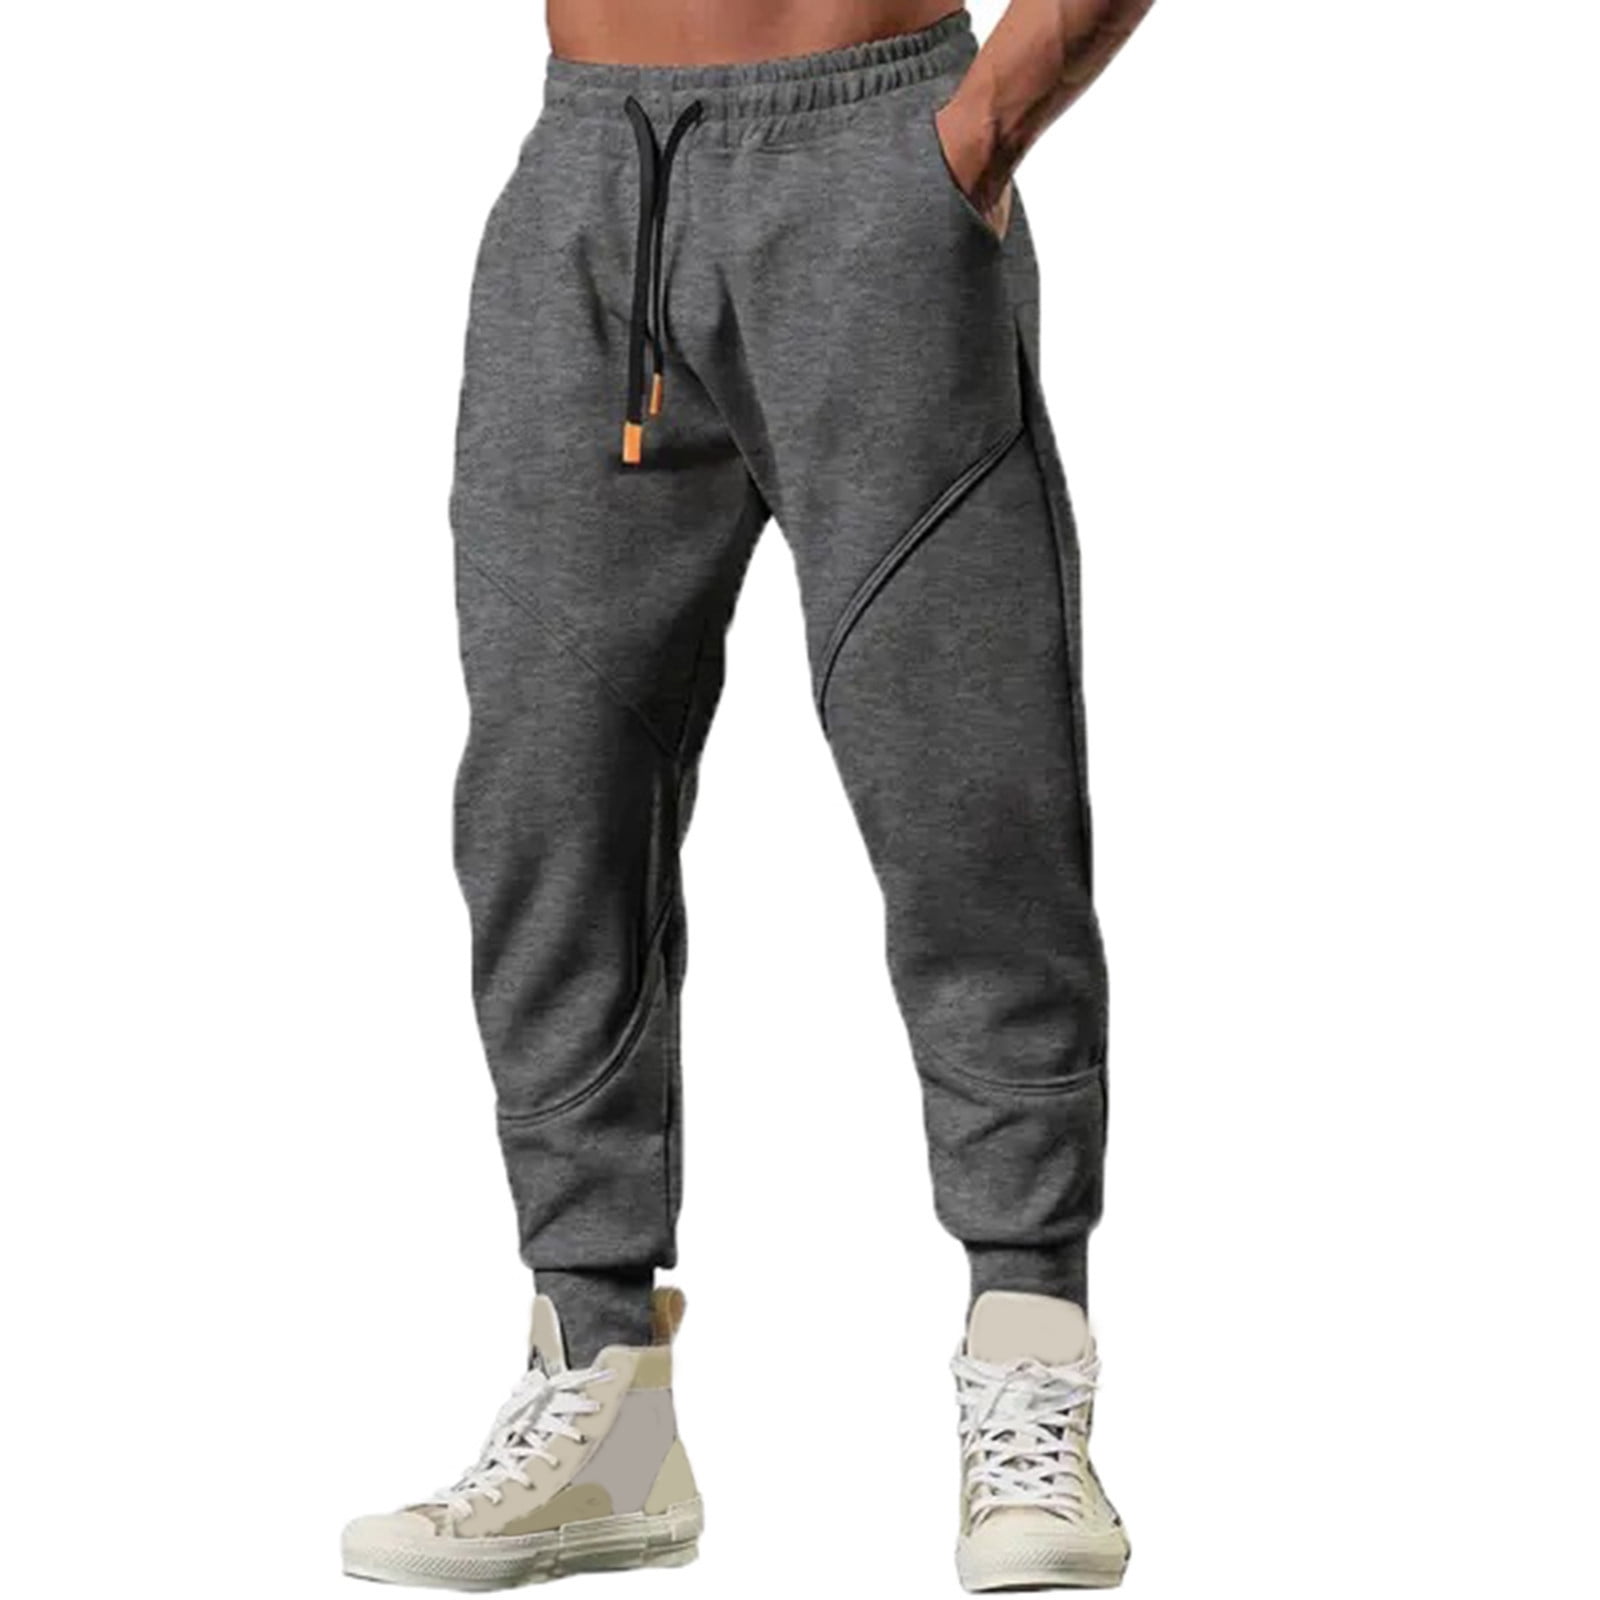 Yievot Mens Track Pants Clearance Pure Baggy Workout Pants